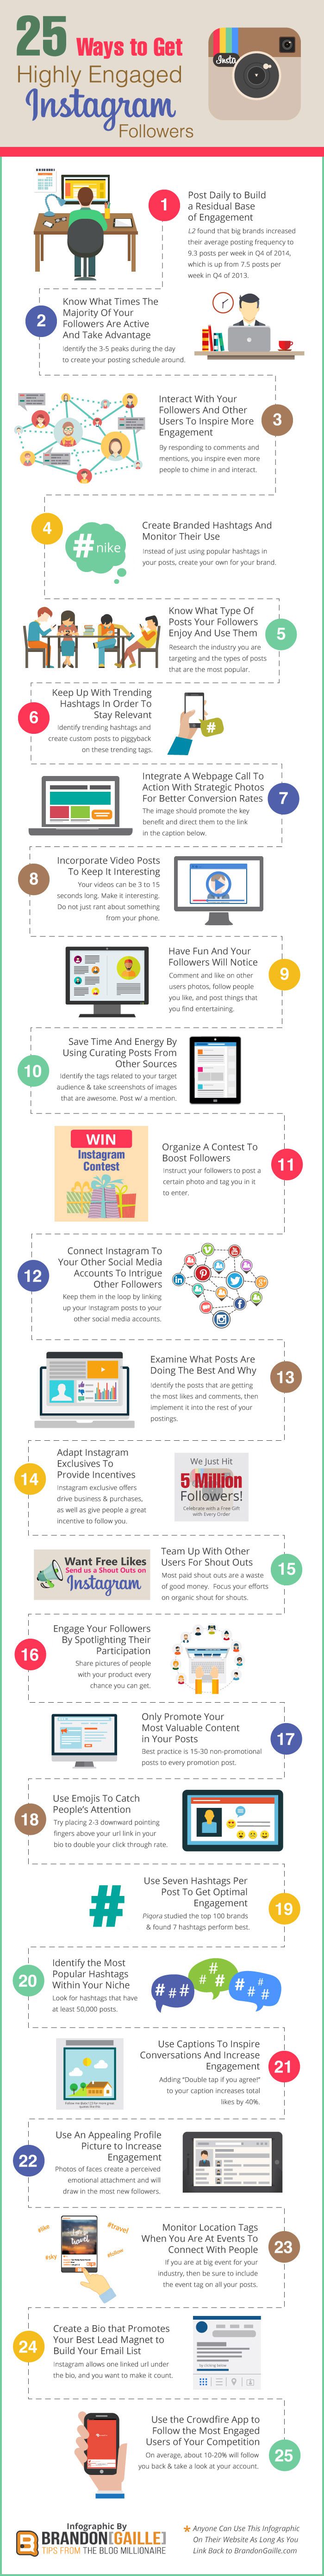 Instagram-Marketing-Infographic-v2